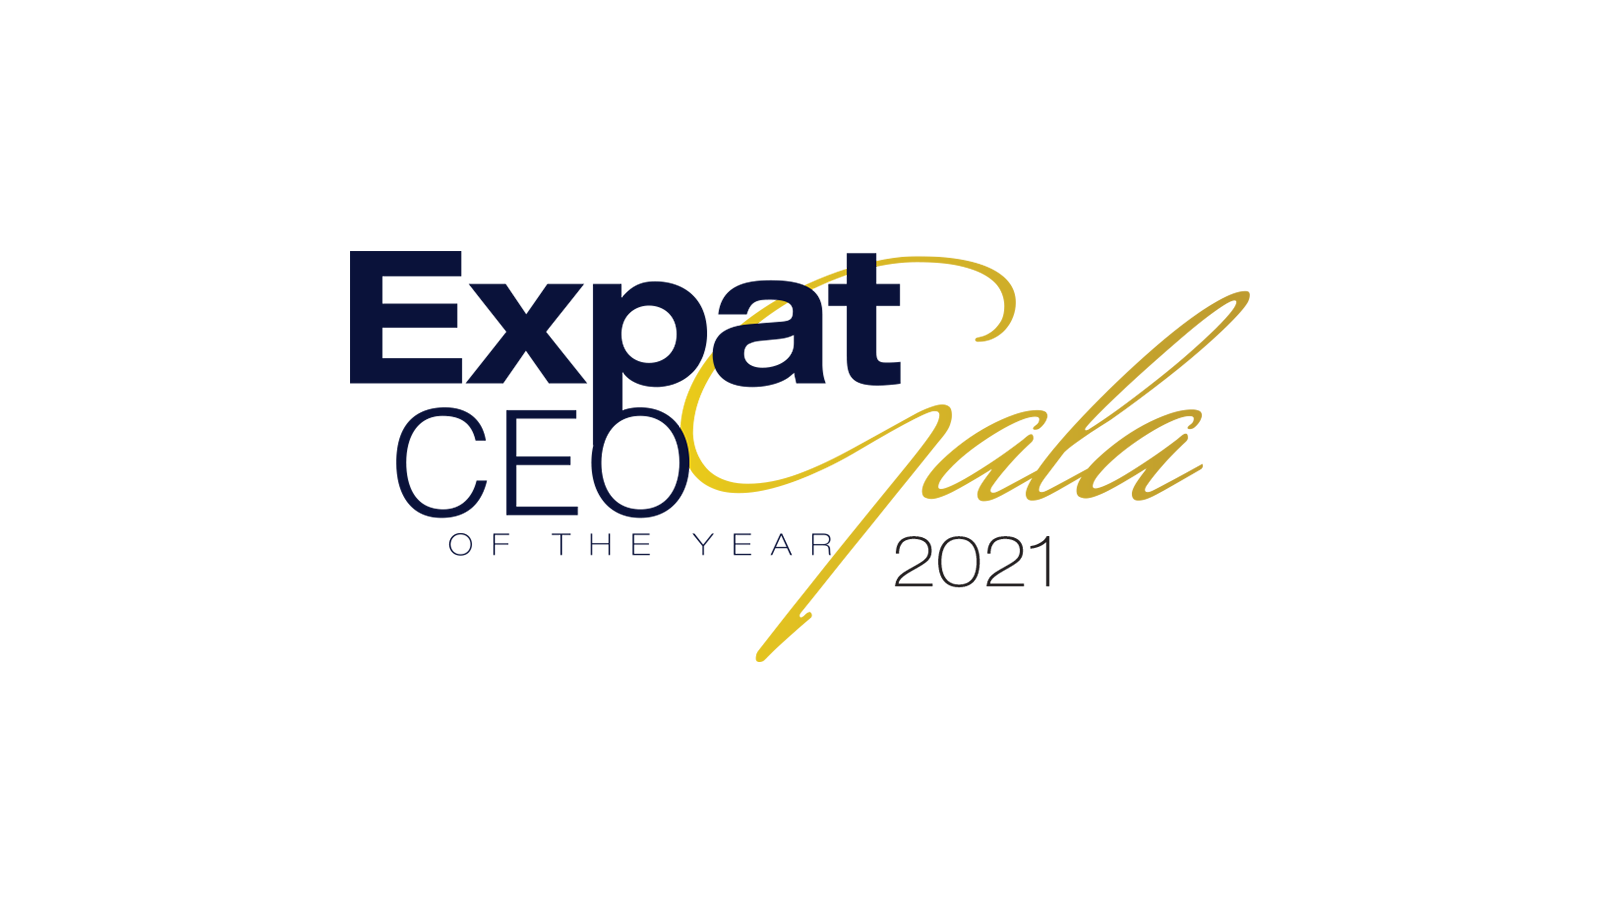 BBJ Expat CEO Award 2021 shortlist announced